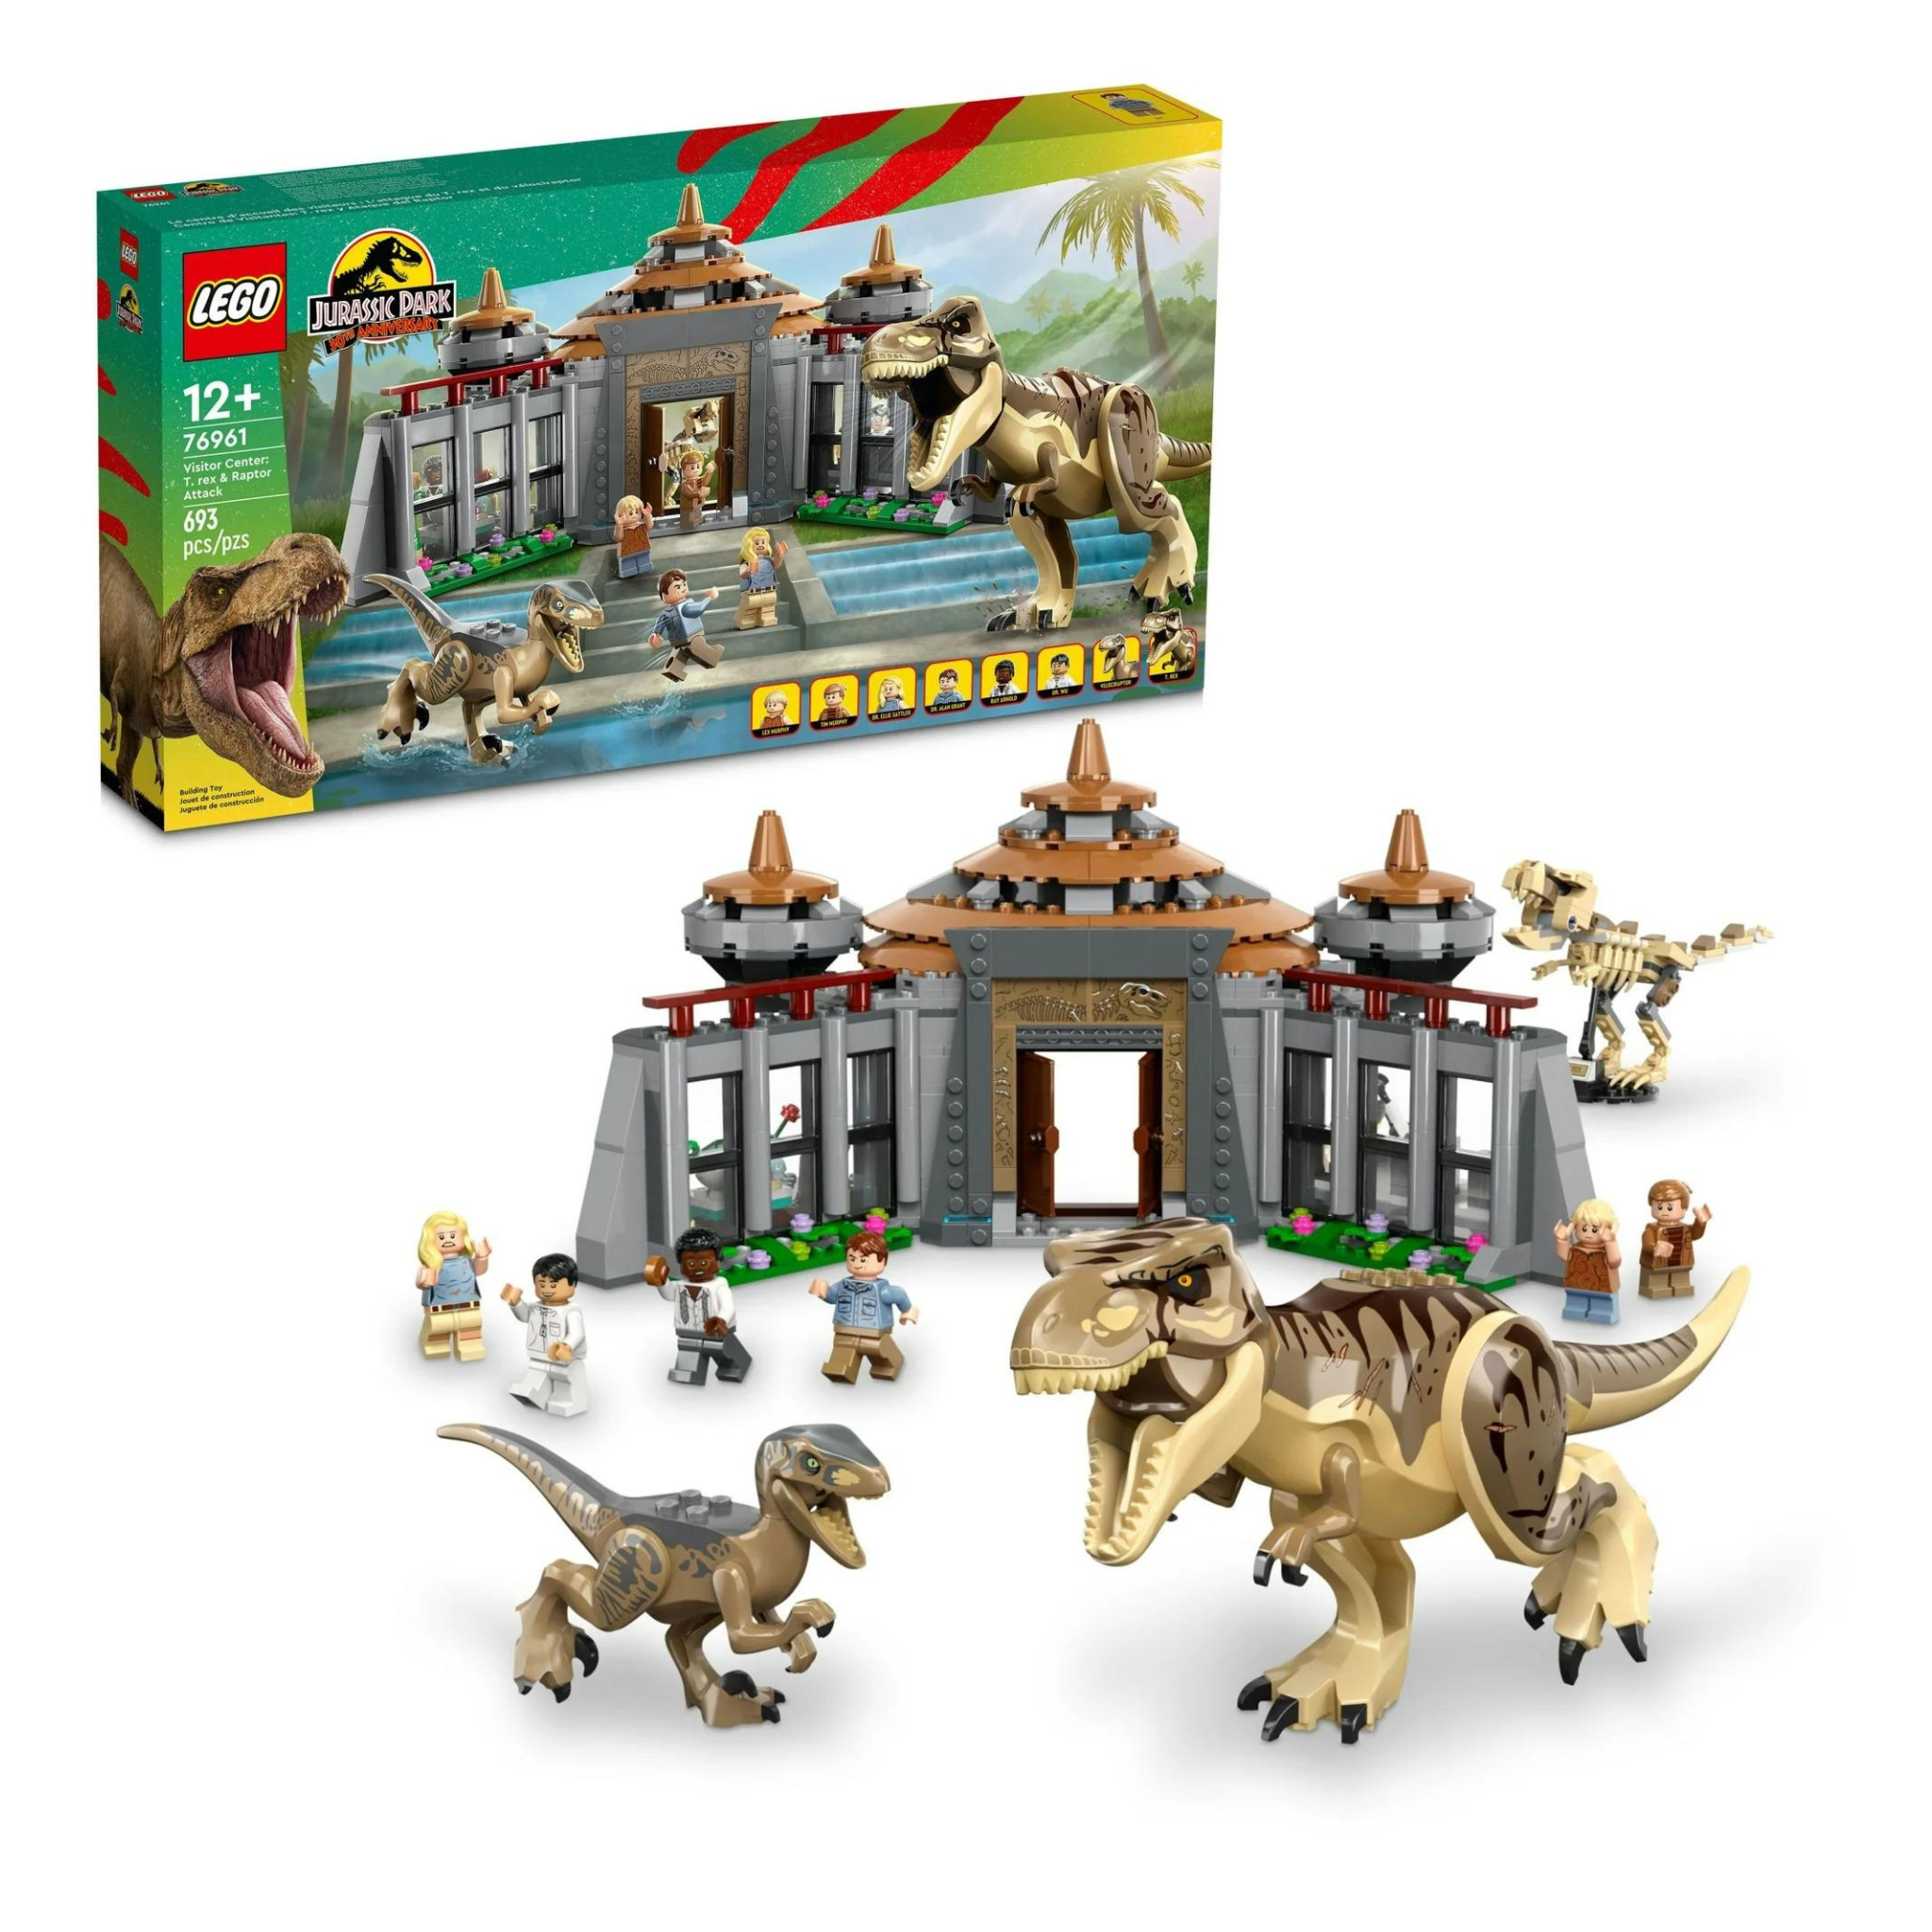 LEGO Jurassic Park Visitor Center: T. rex & Raptor Attack